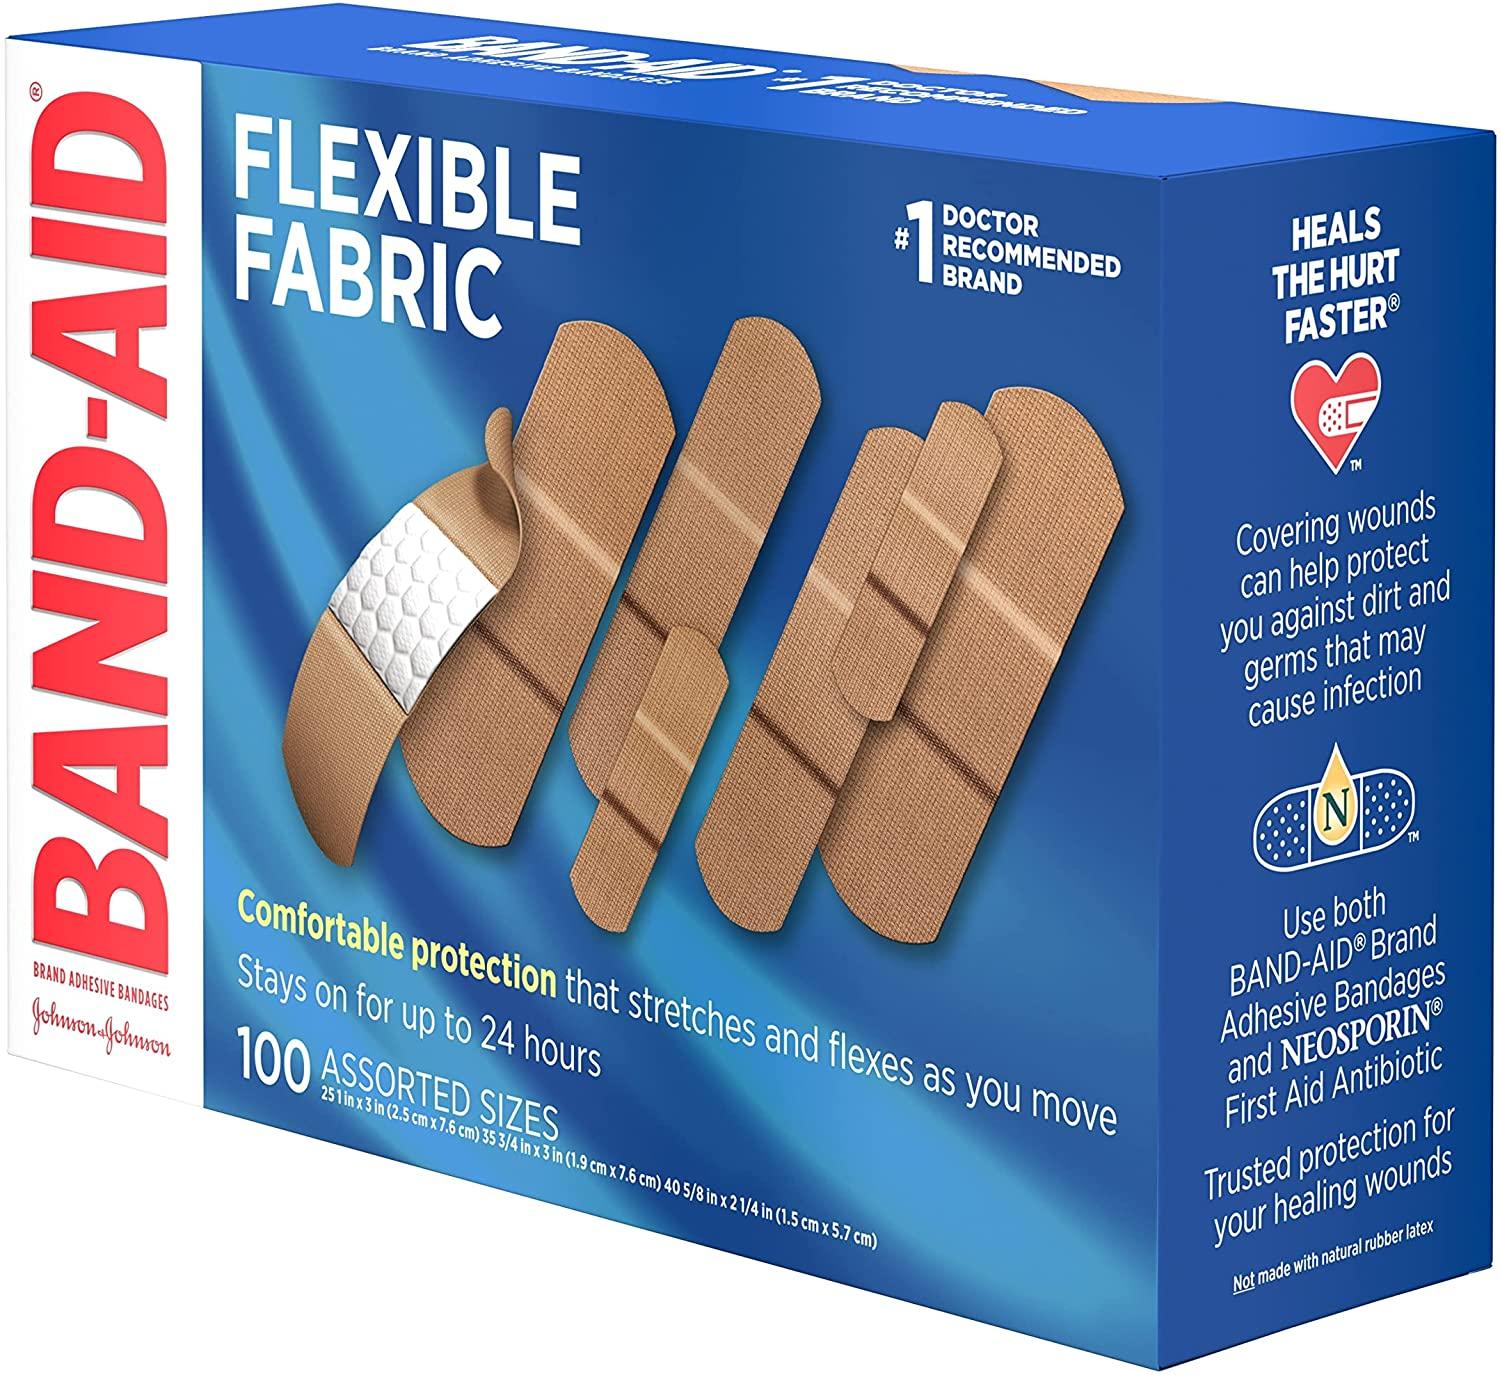 Band-Aid Flexible Fabric Adhesive Bandages, Flexible Protection